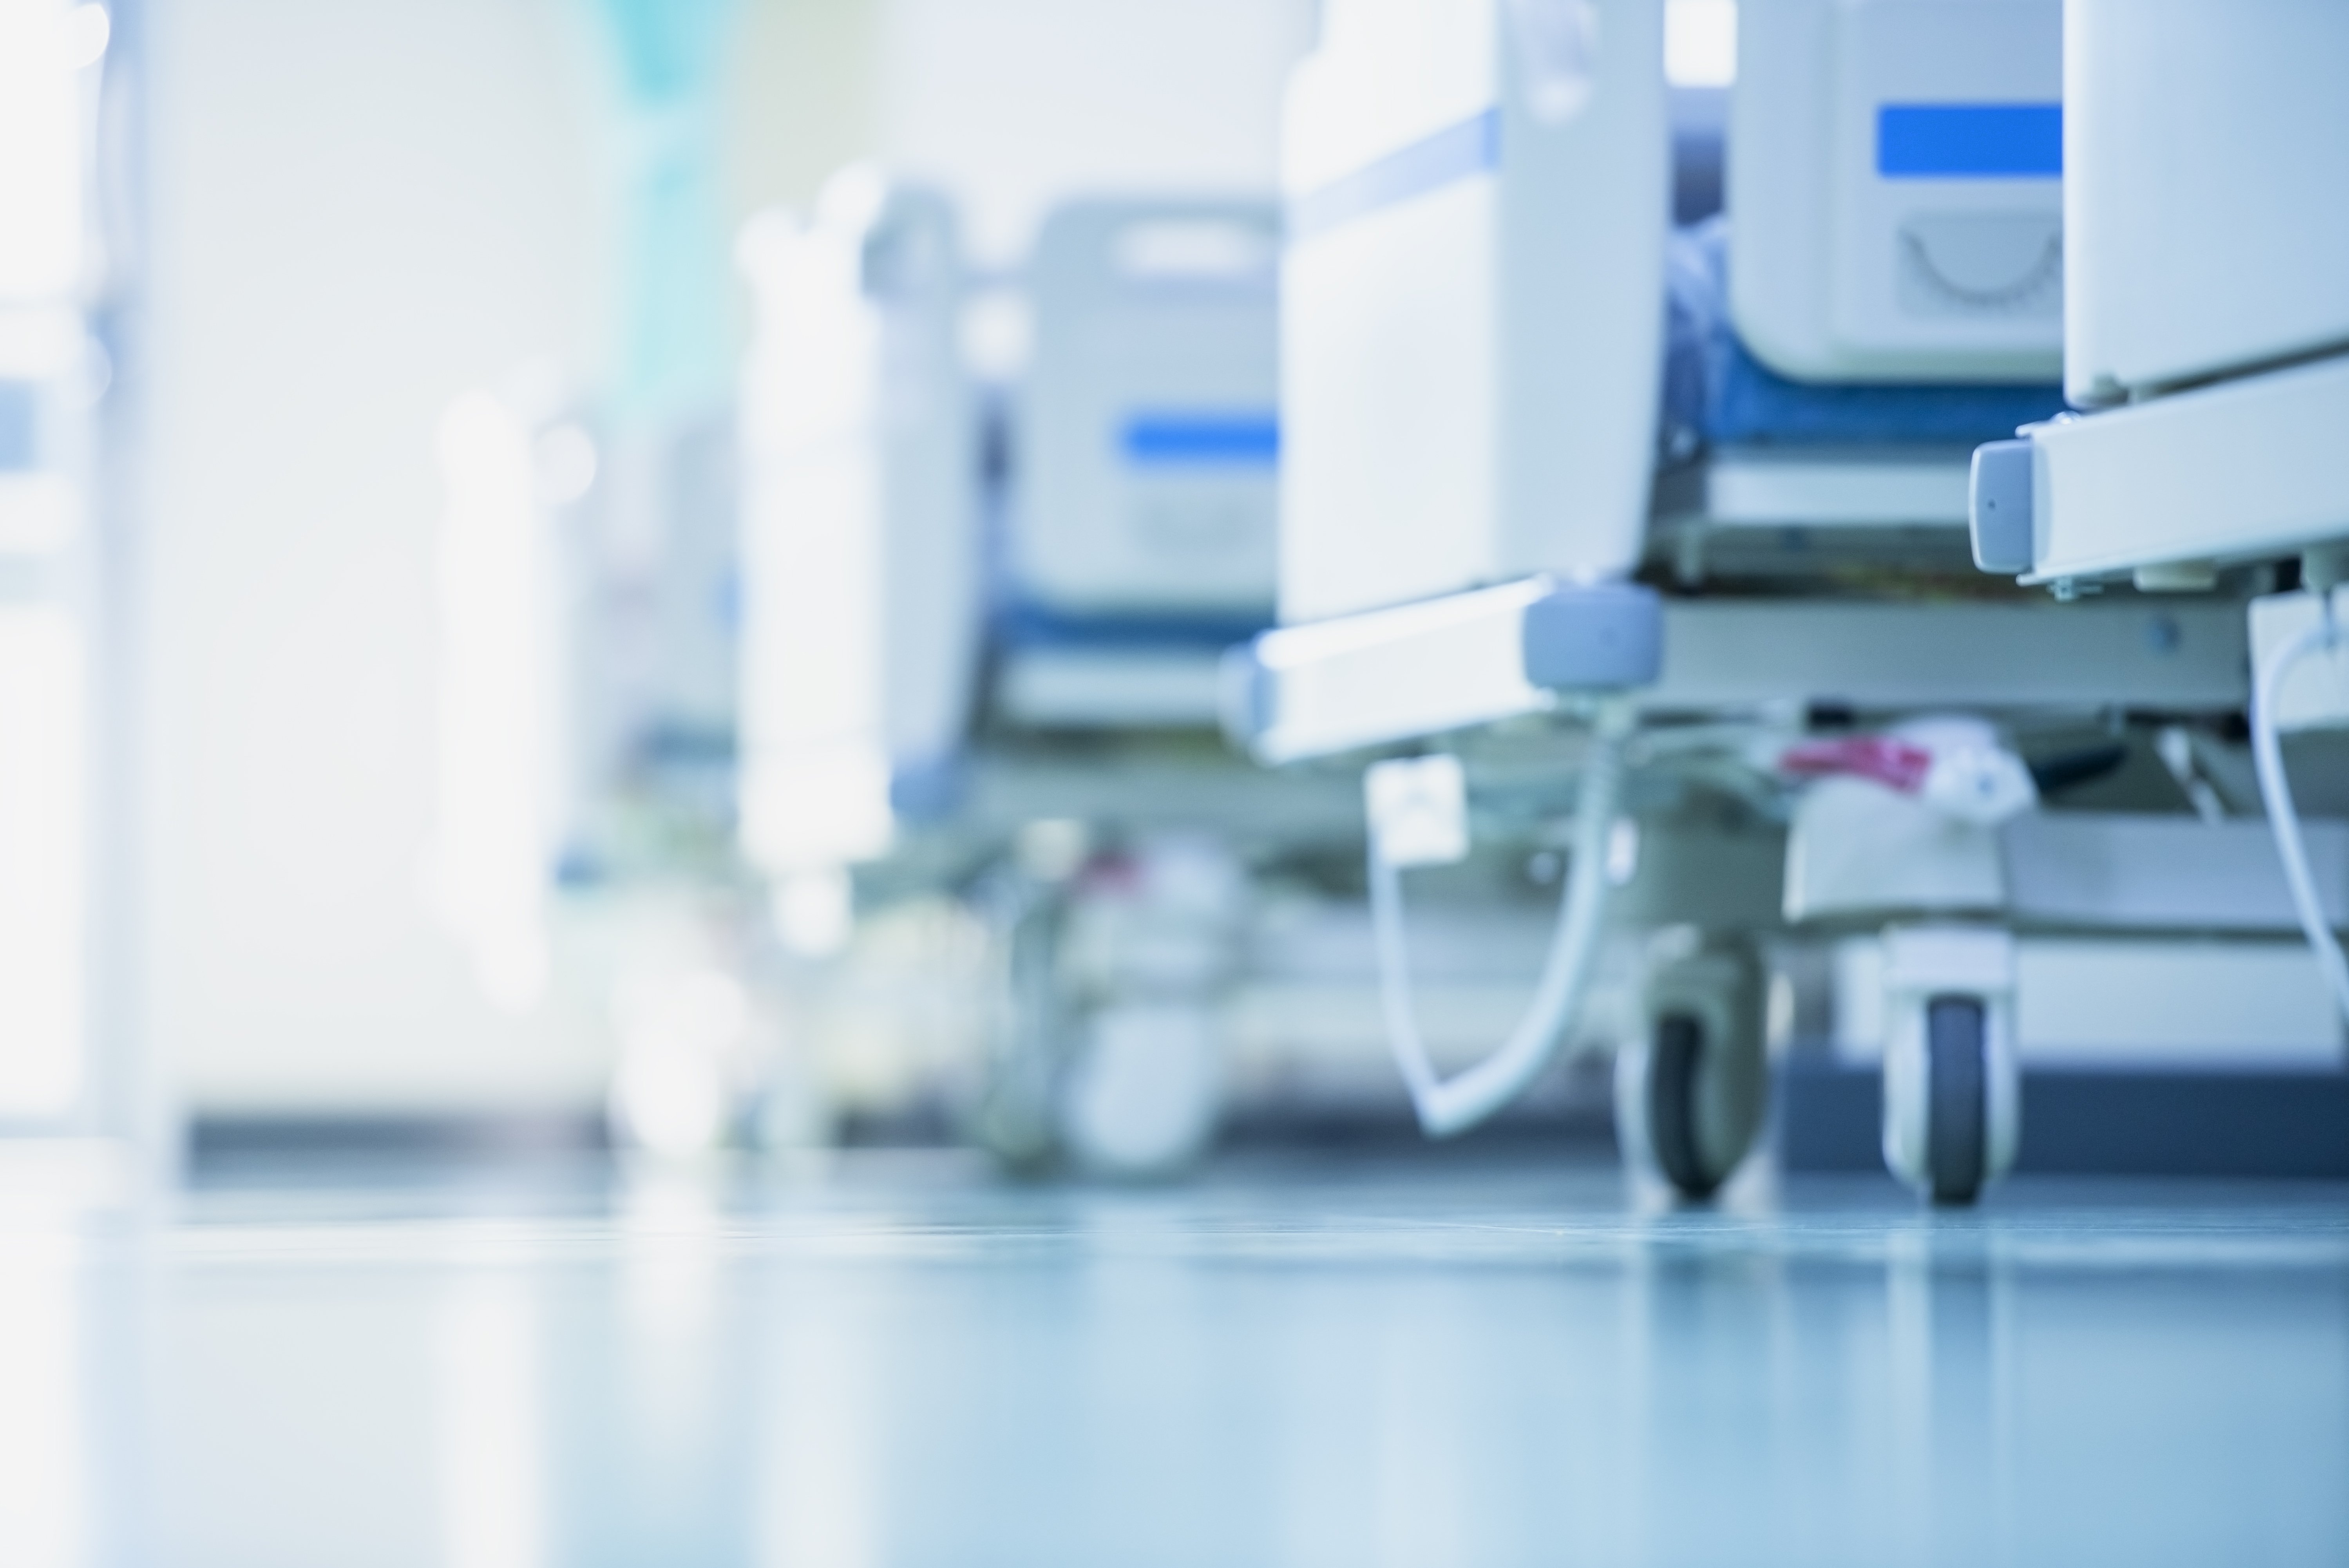 Camas de hospital. | Foto: Shutterstock